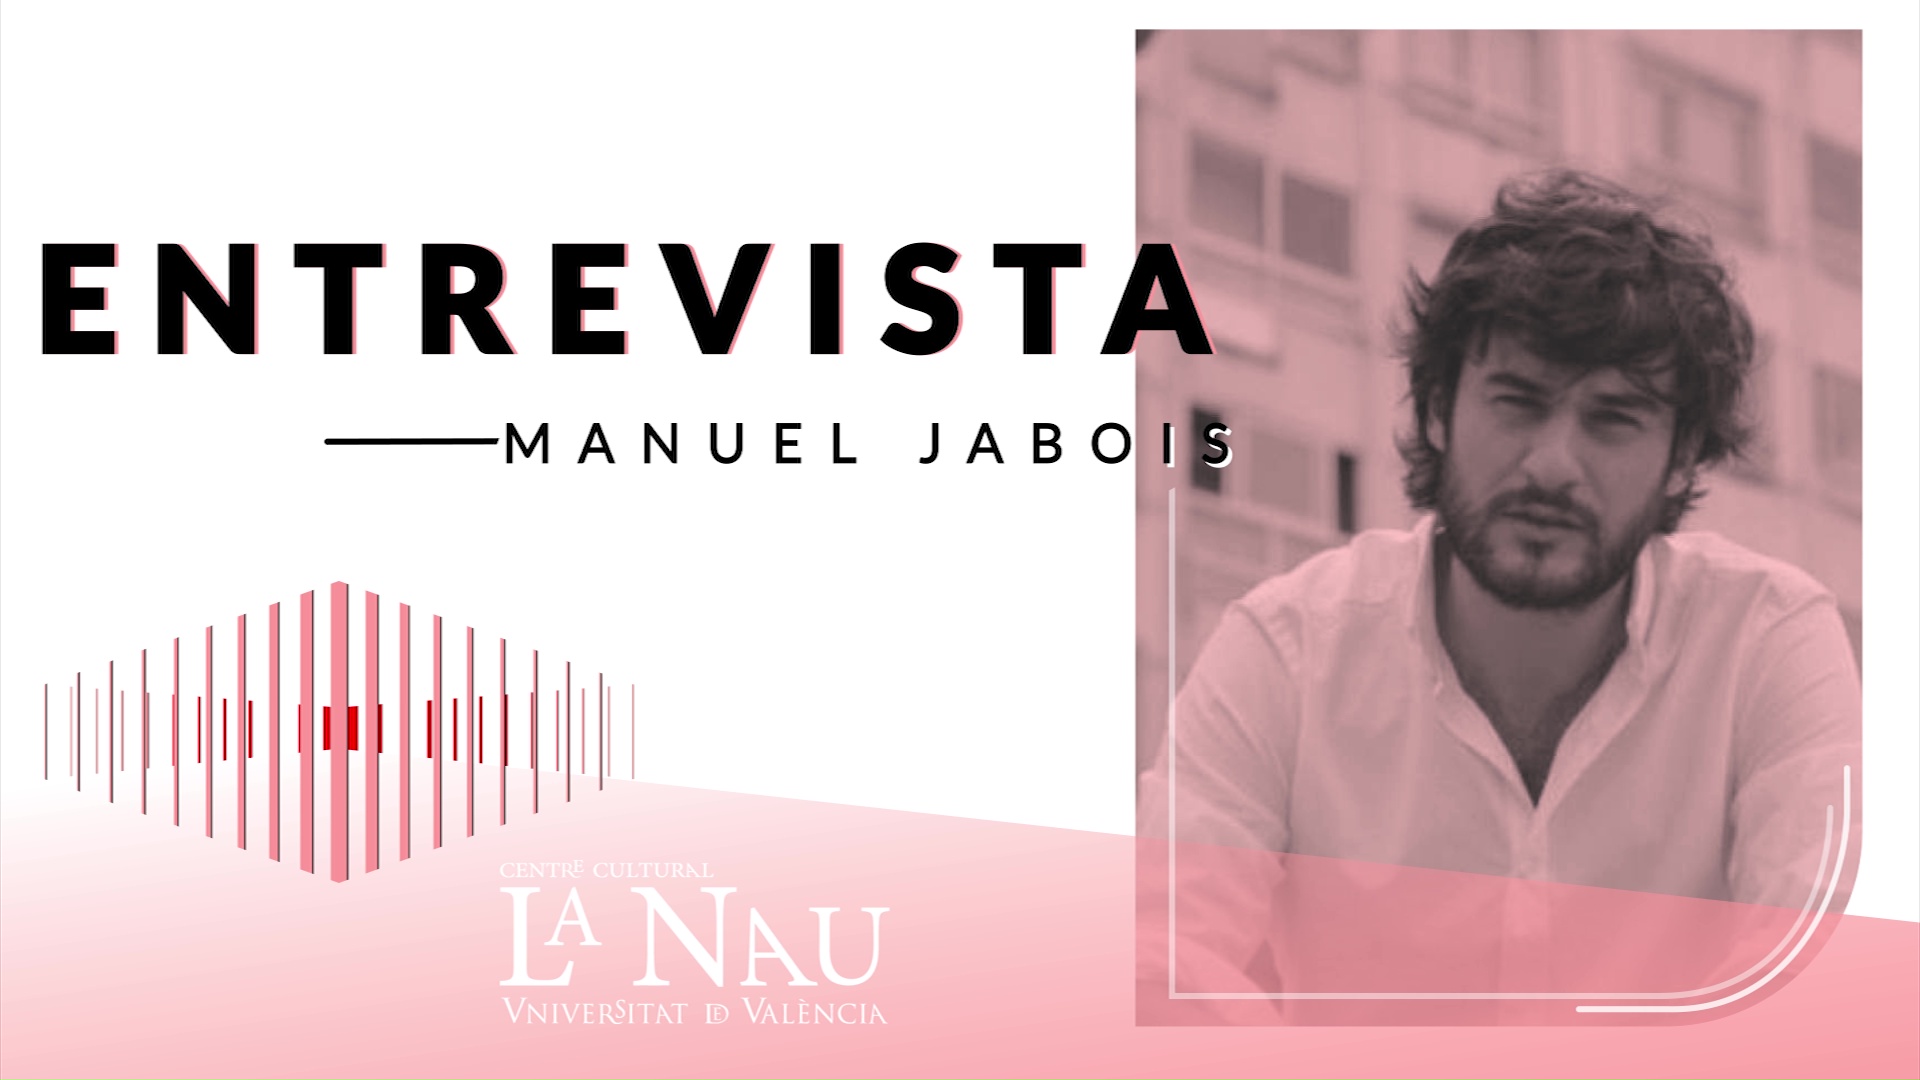 Entrevista a La Nau. Manuel Jabois